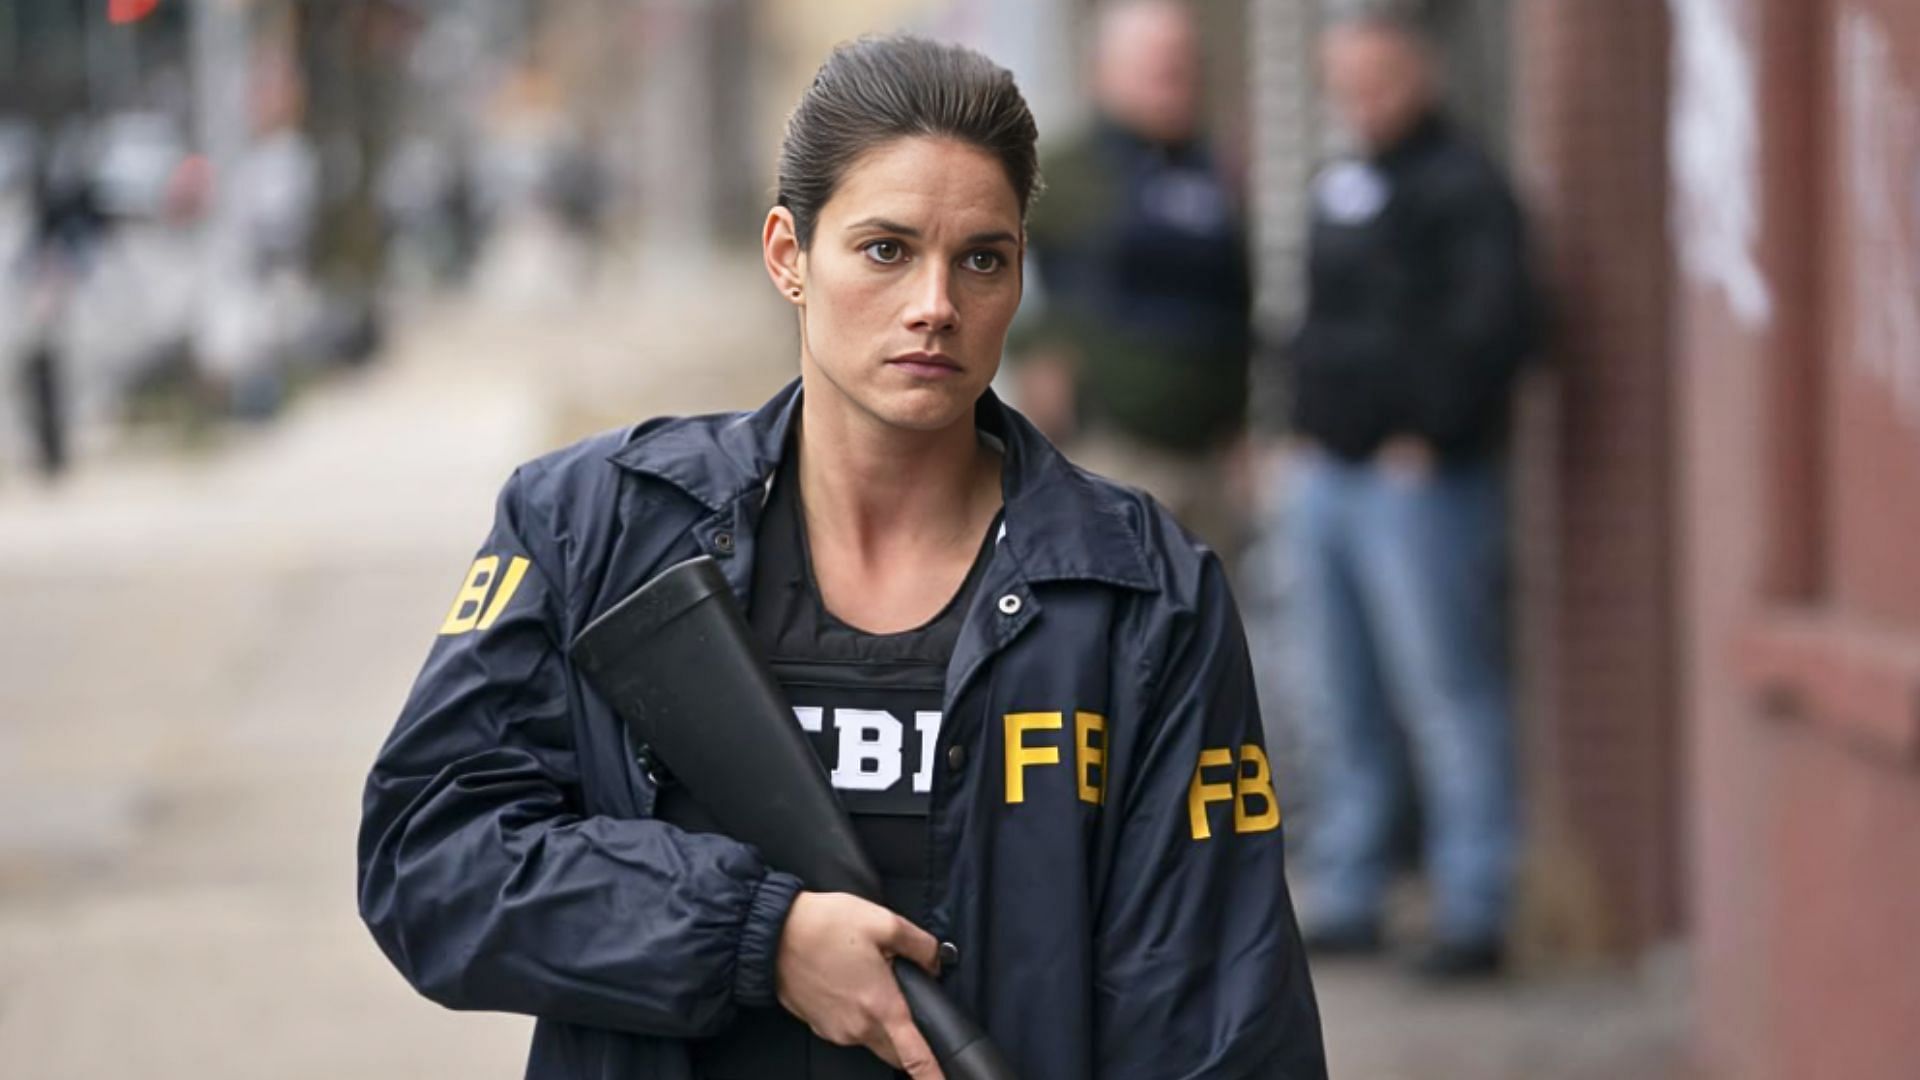 Canadian actress Missy Peregrym stars as Maggie in FBI Season 6 (Image via CBS)